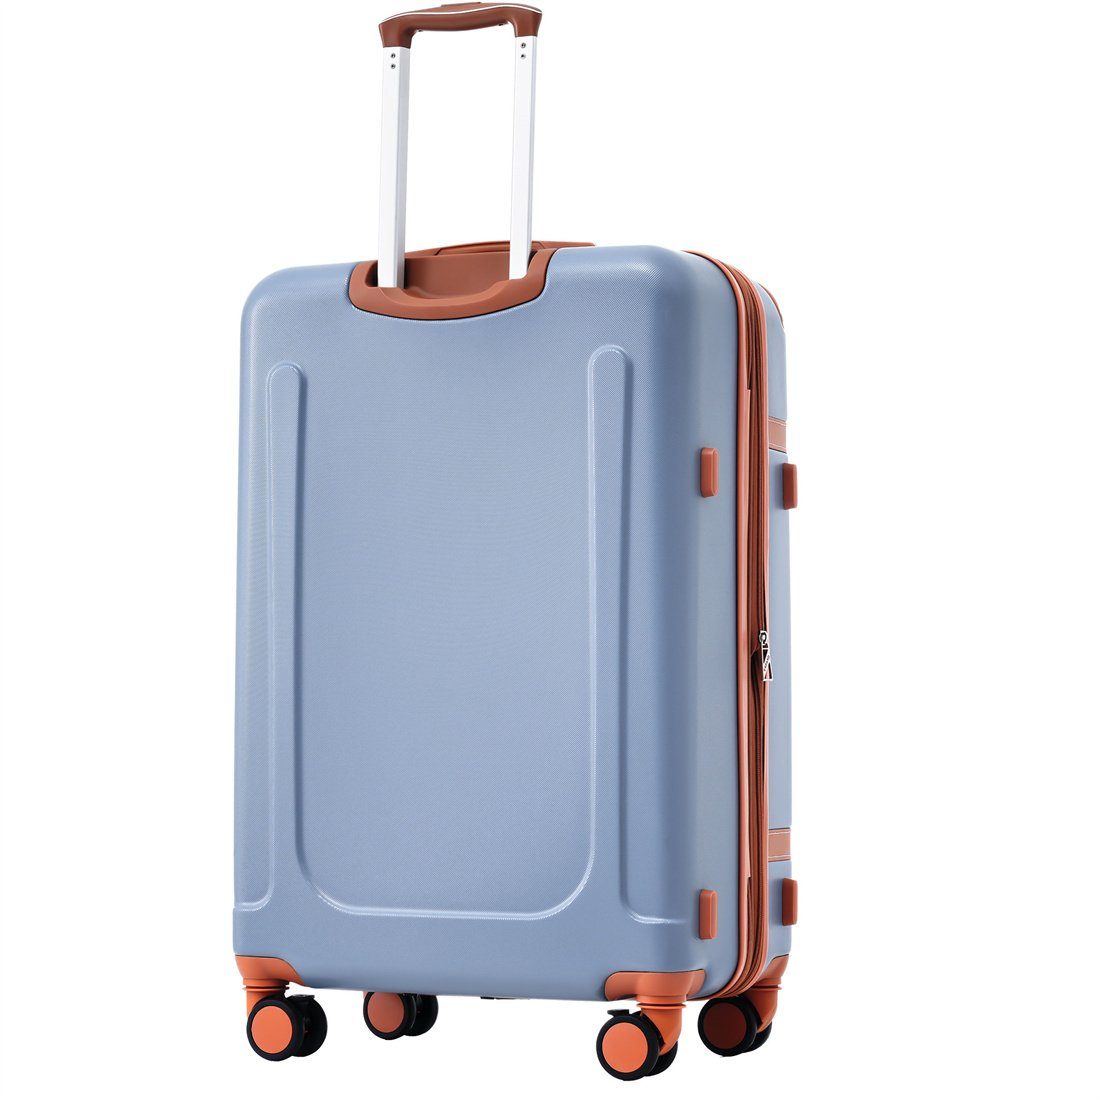 Hartschalen-Koffer,Rollkoffer,Reisekoffer,66*44*26.5cm,Dunstblau+braun Koffer DÖRÖY